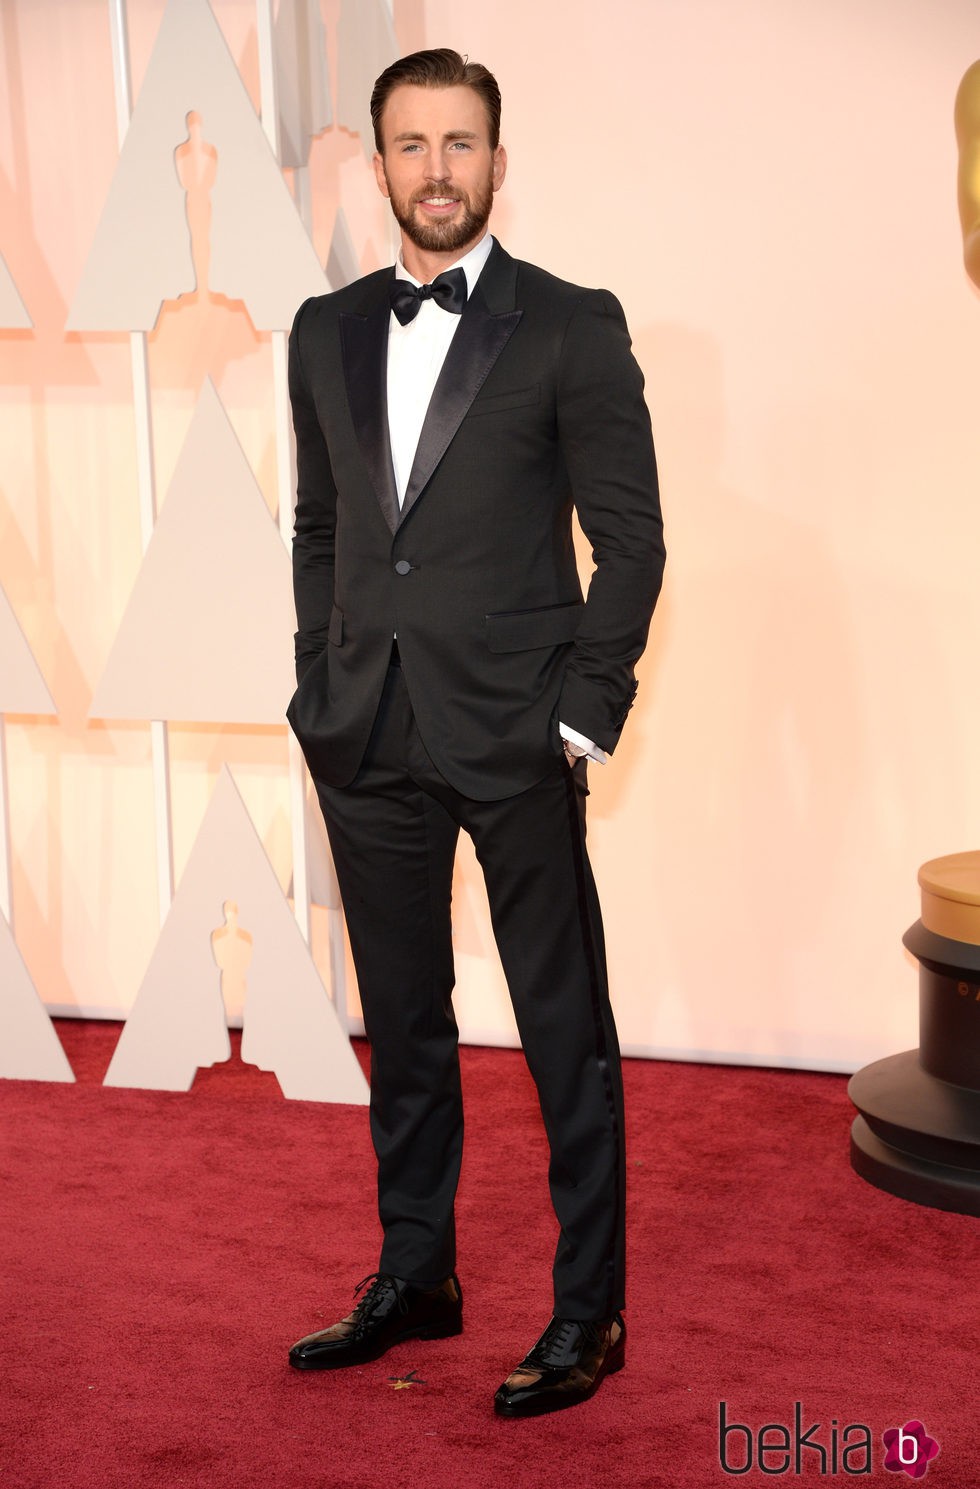 Chris Evans posa a su llegada a la alfombra roja de los Oscar 2015